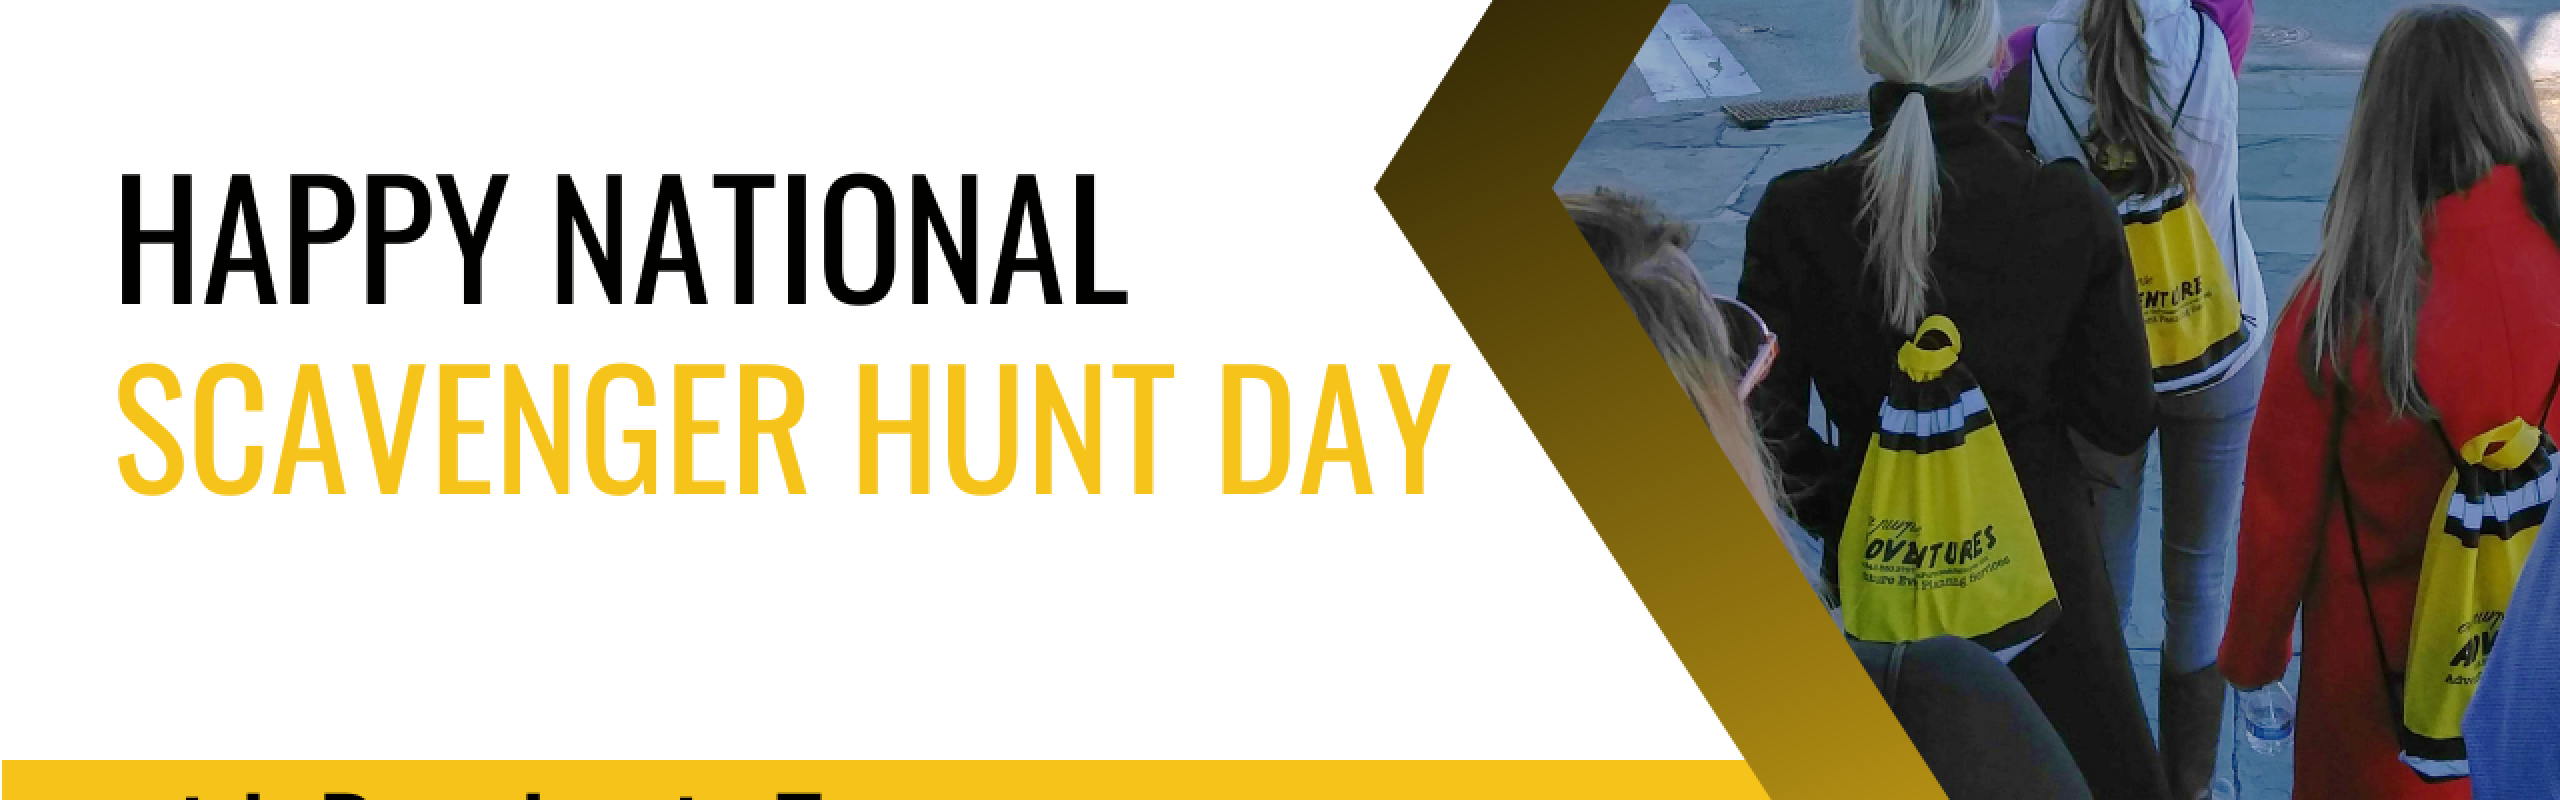 Happy National Scavenger Hunt Day